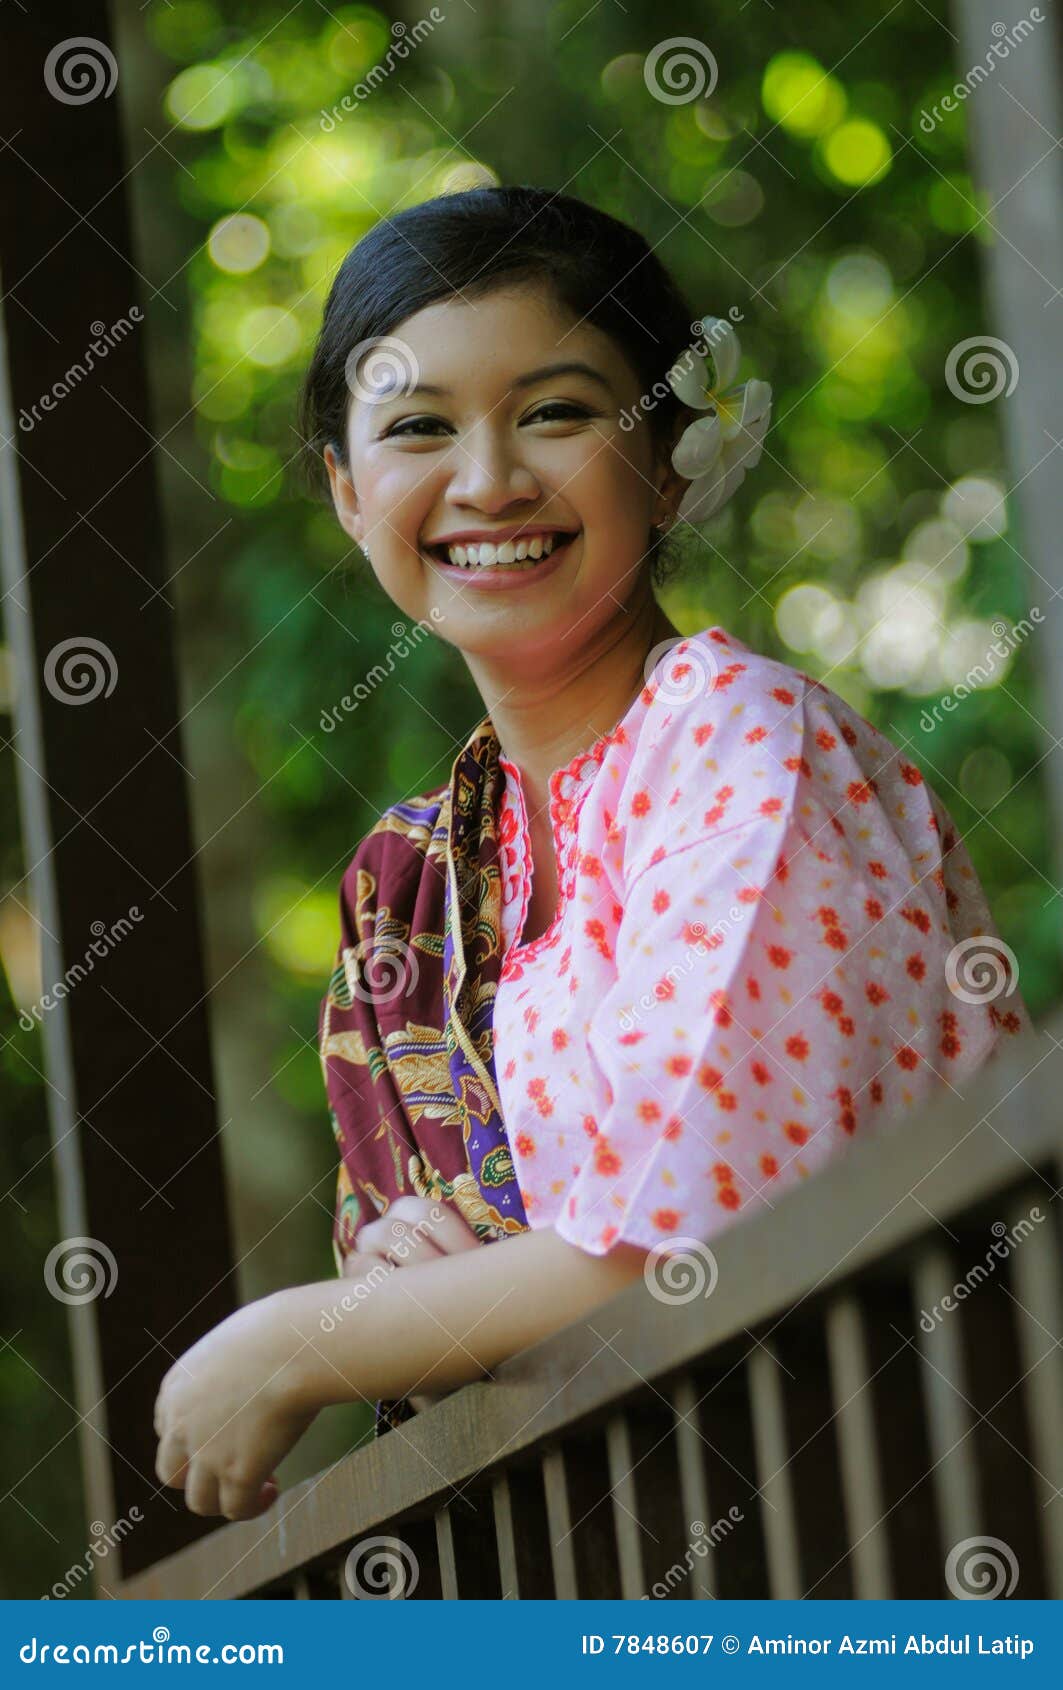 Gadis Melayu Stock Image Image Of Malaysian Beauty Girl 7848607